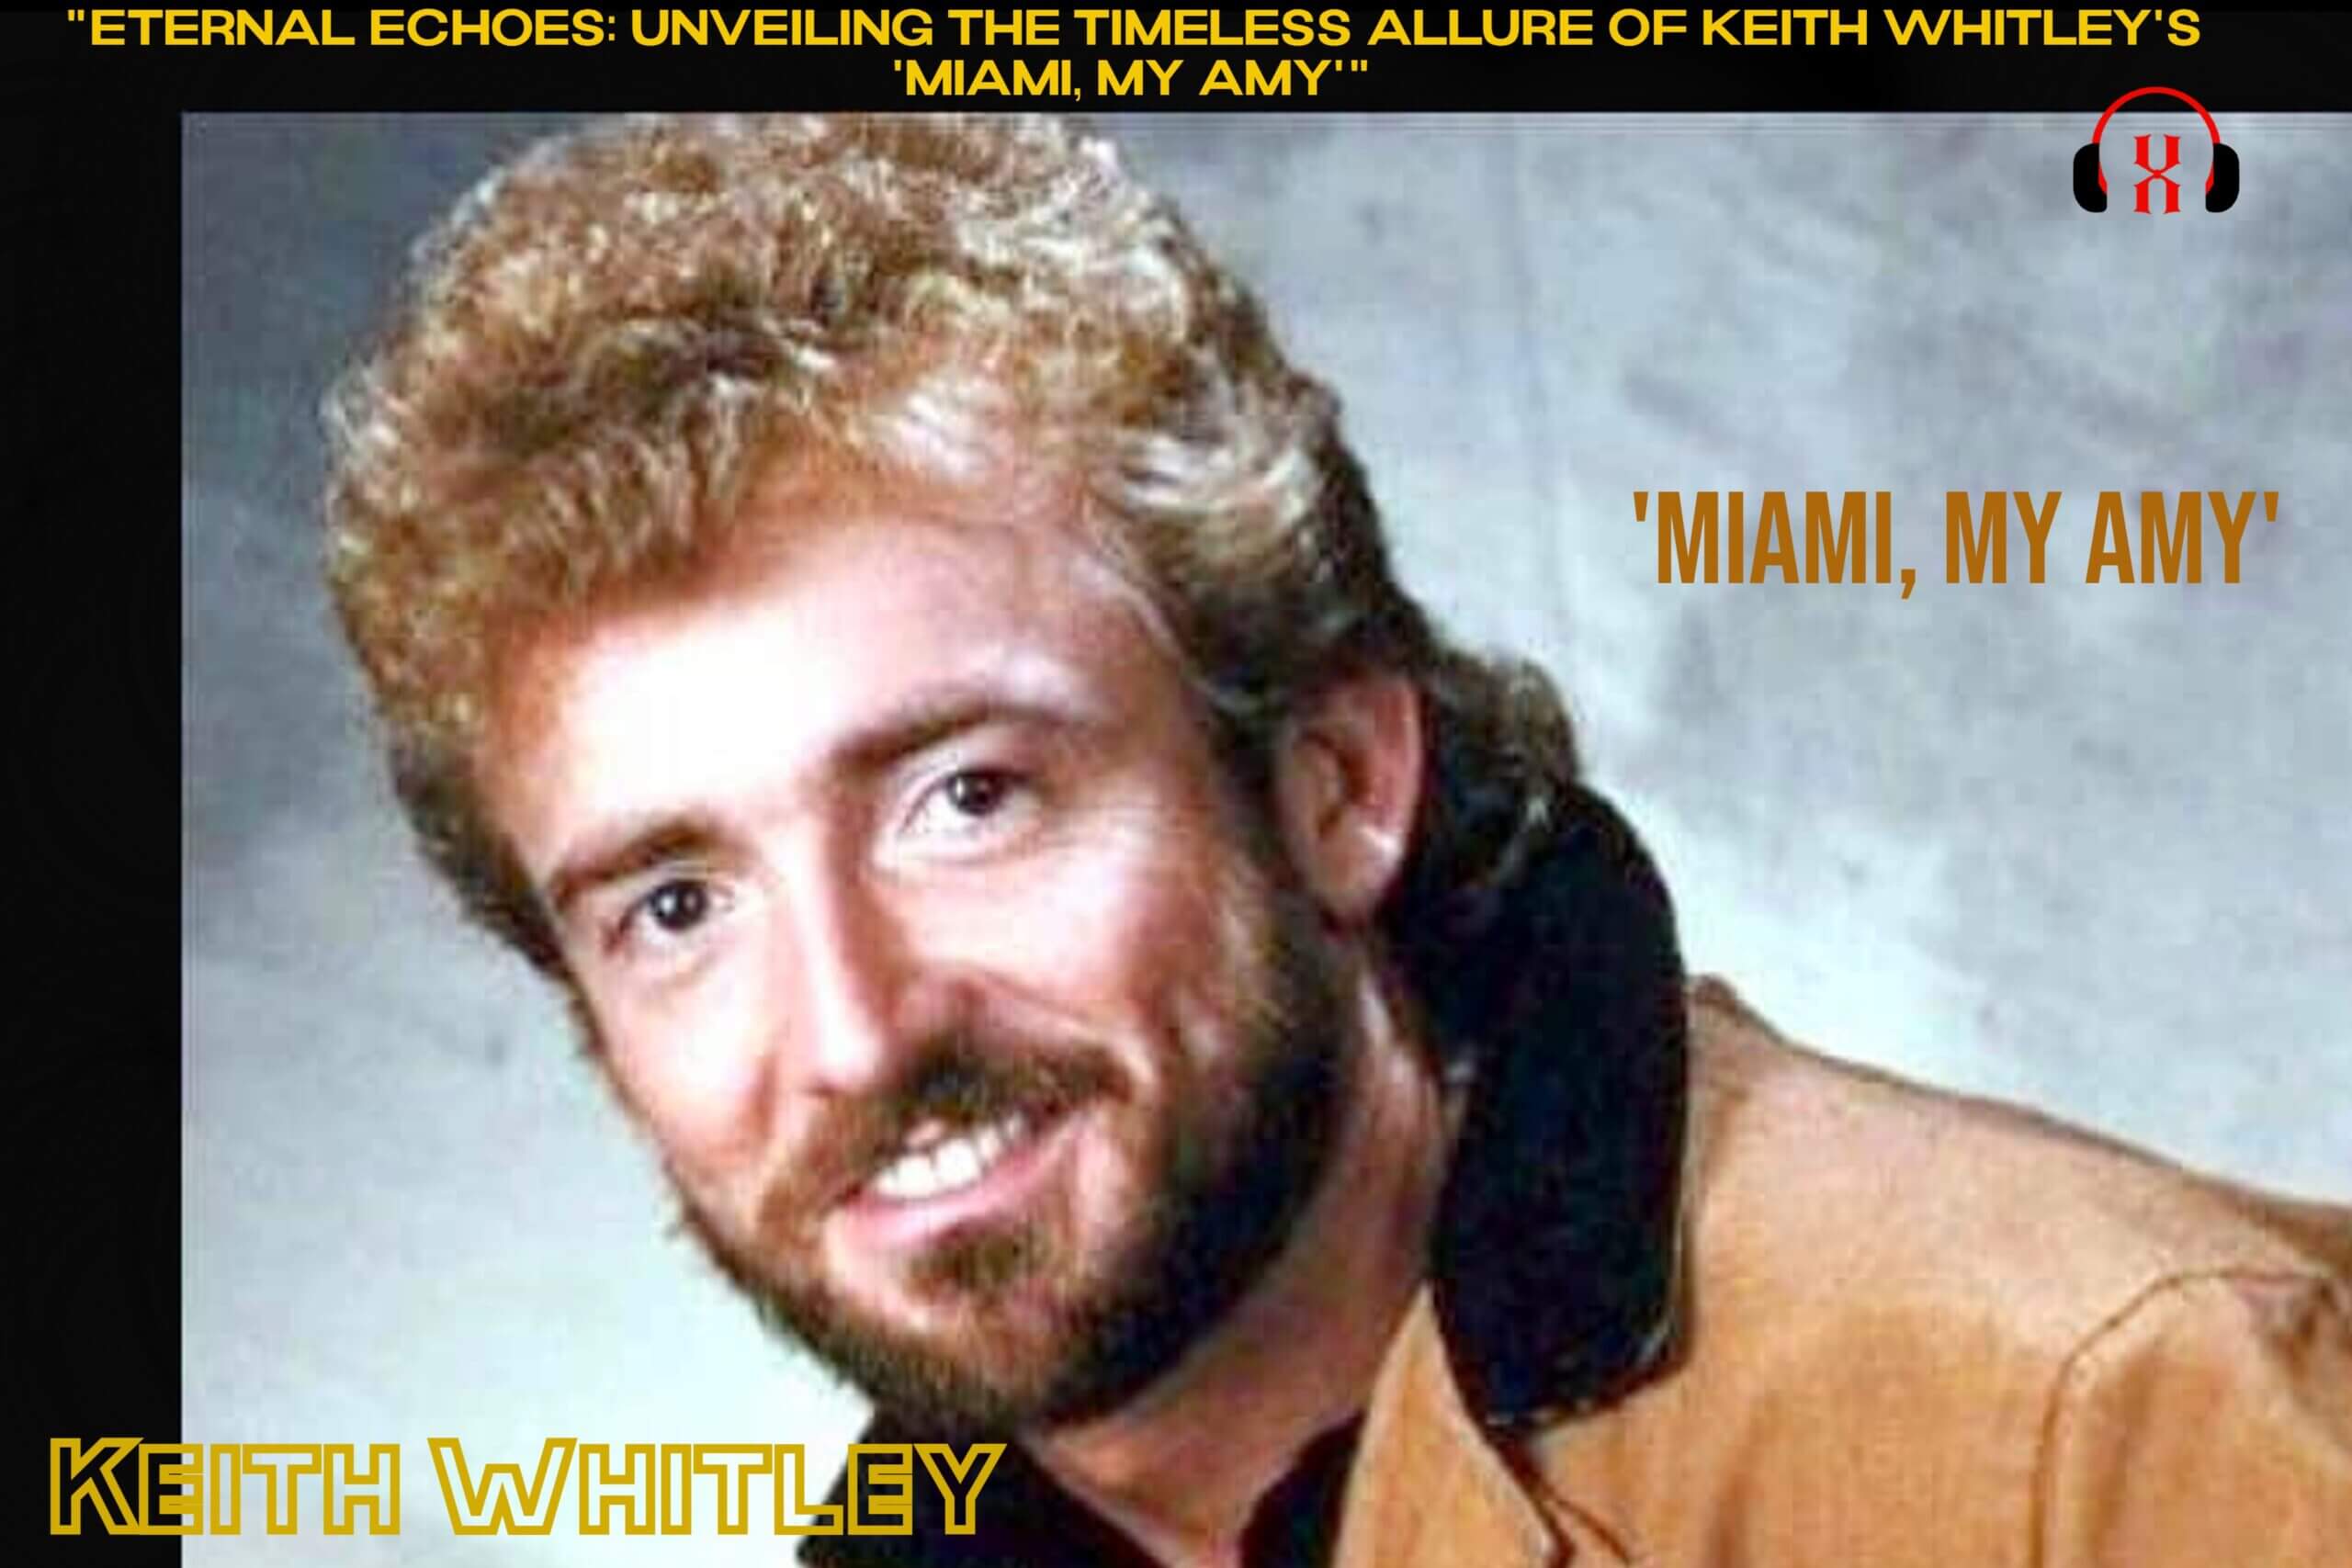 Keith Whitley's 'Miami, My Amy'"